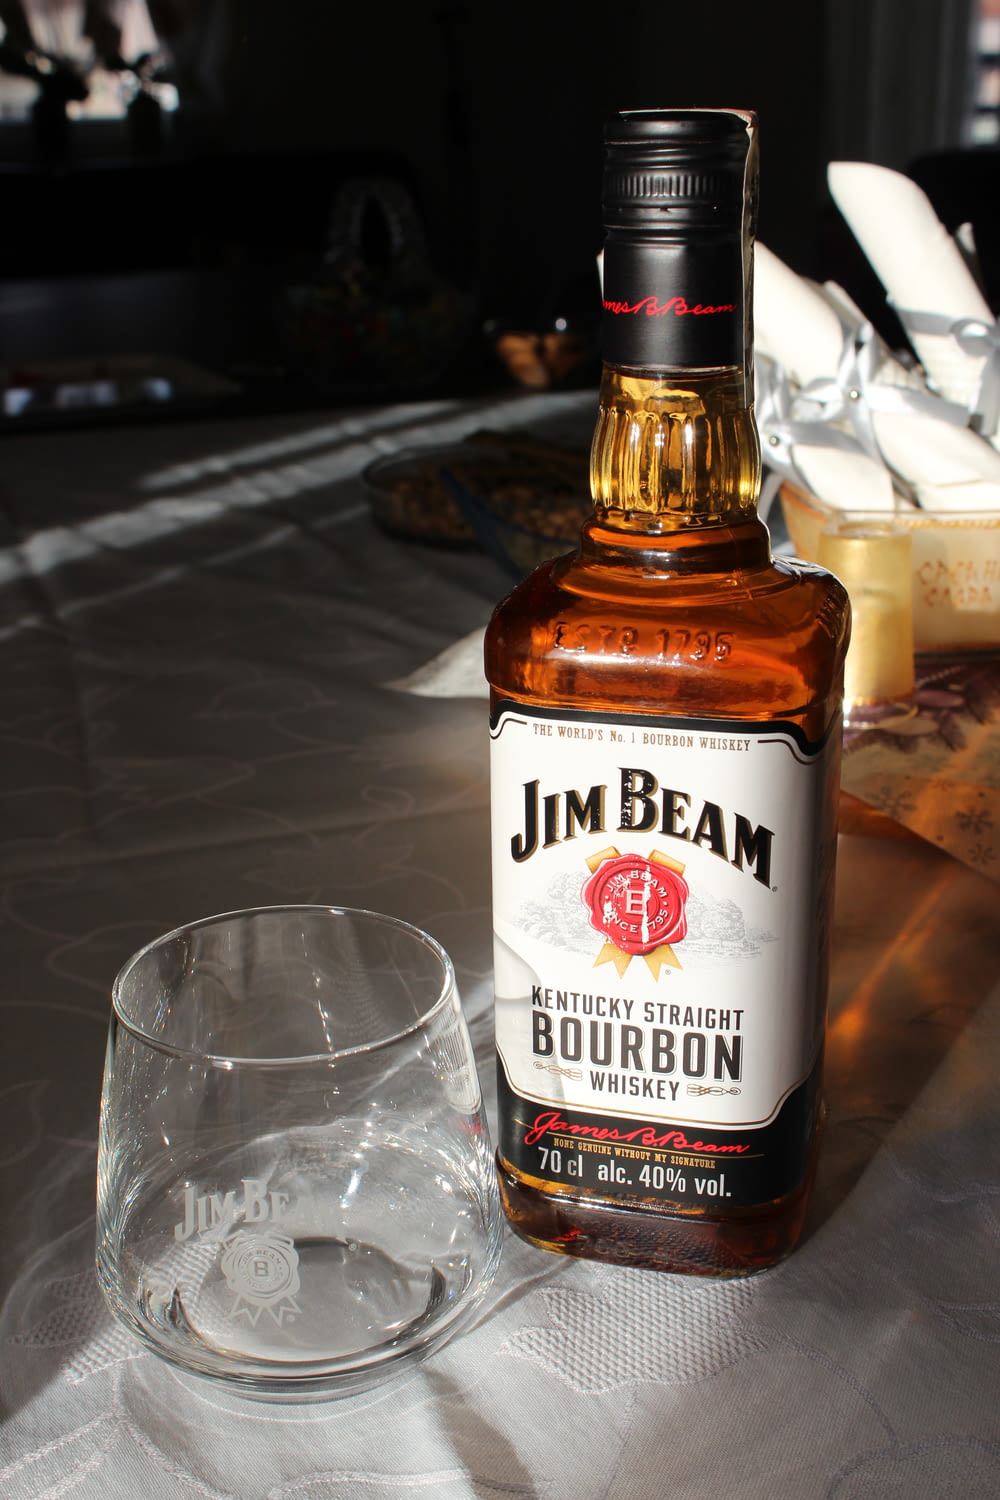 Jum Beam Bourbon wine bottle